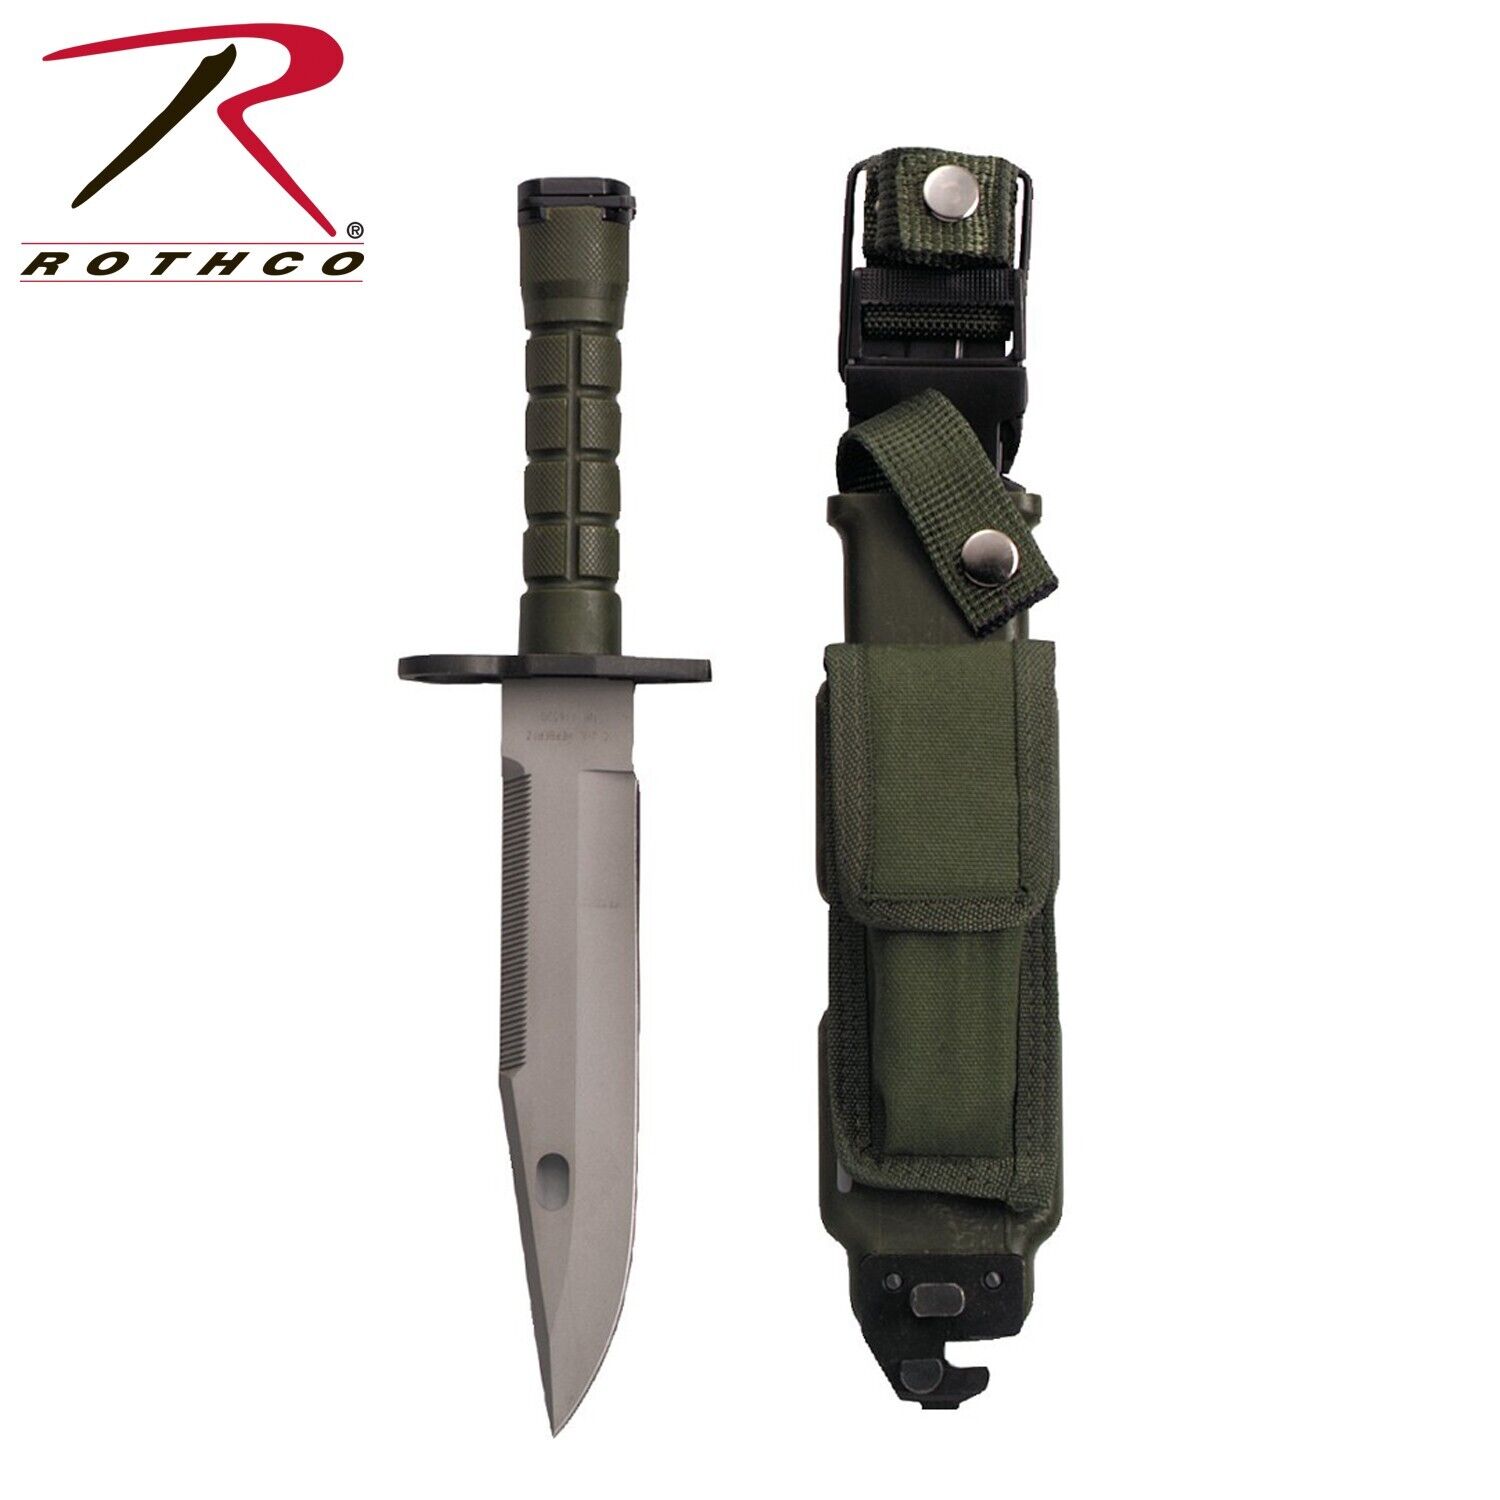 Rothco G.I. Type M-9 Bayonet W/Sheath - Olive Drab